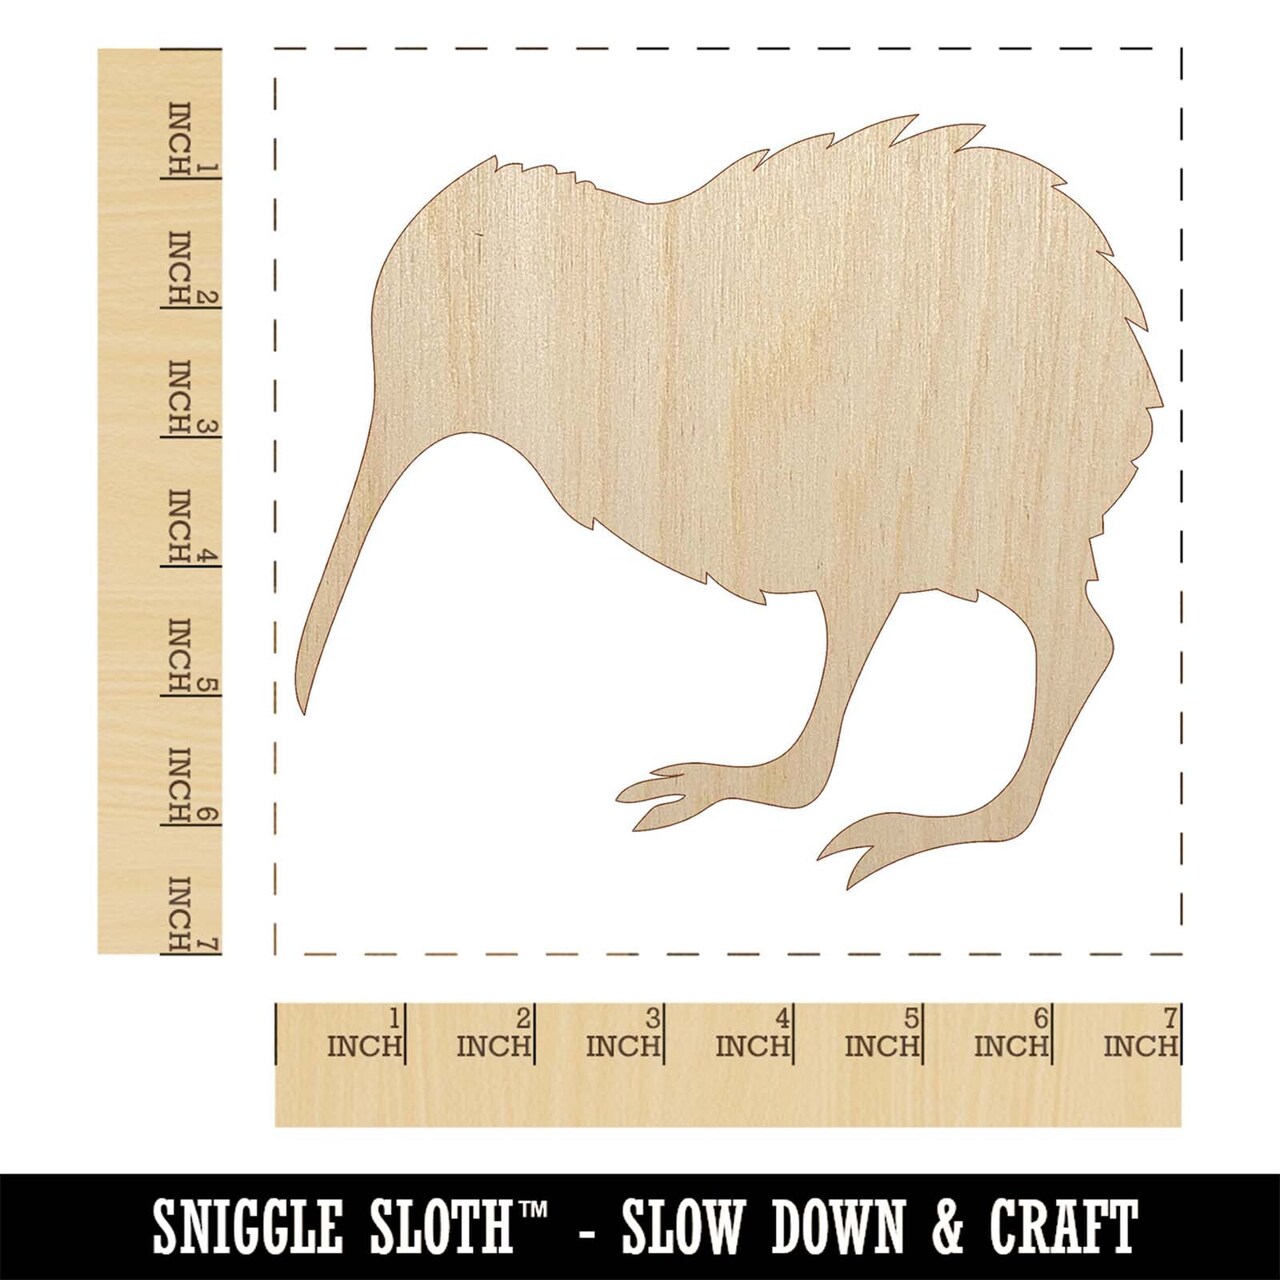 New Zealand Kiwi Bird Unfinished Wood Shape Piece Cutout for DIY Craft Projects